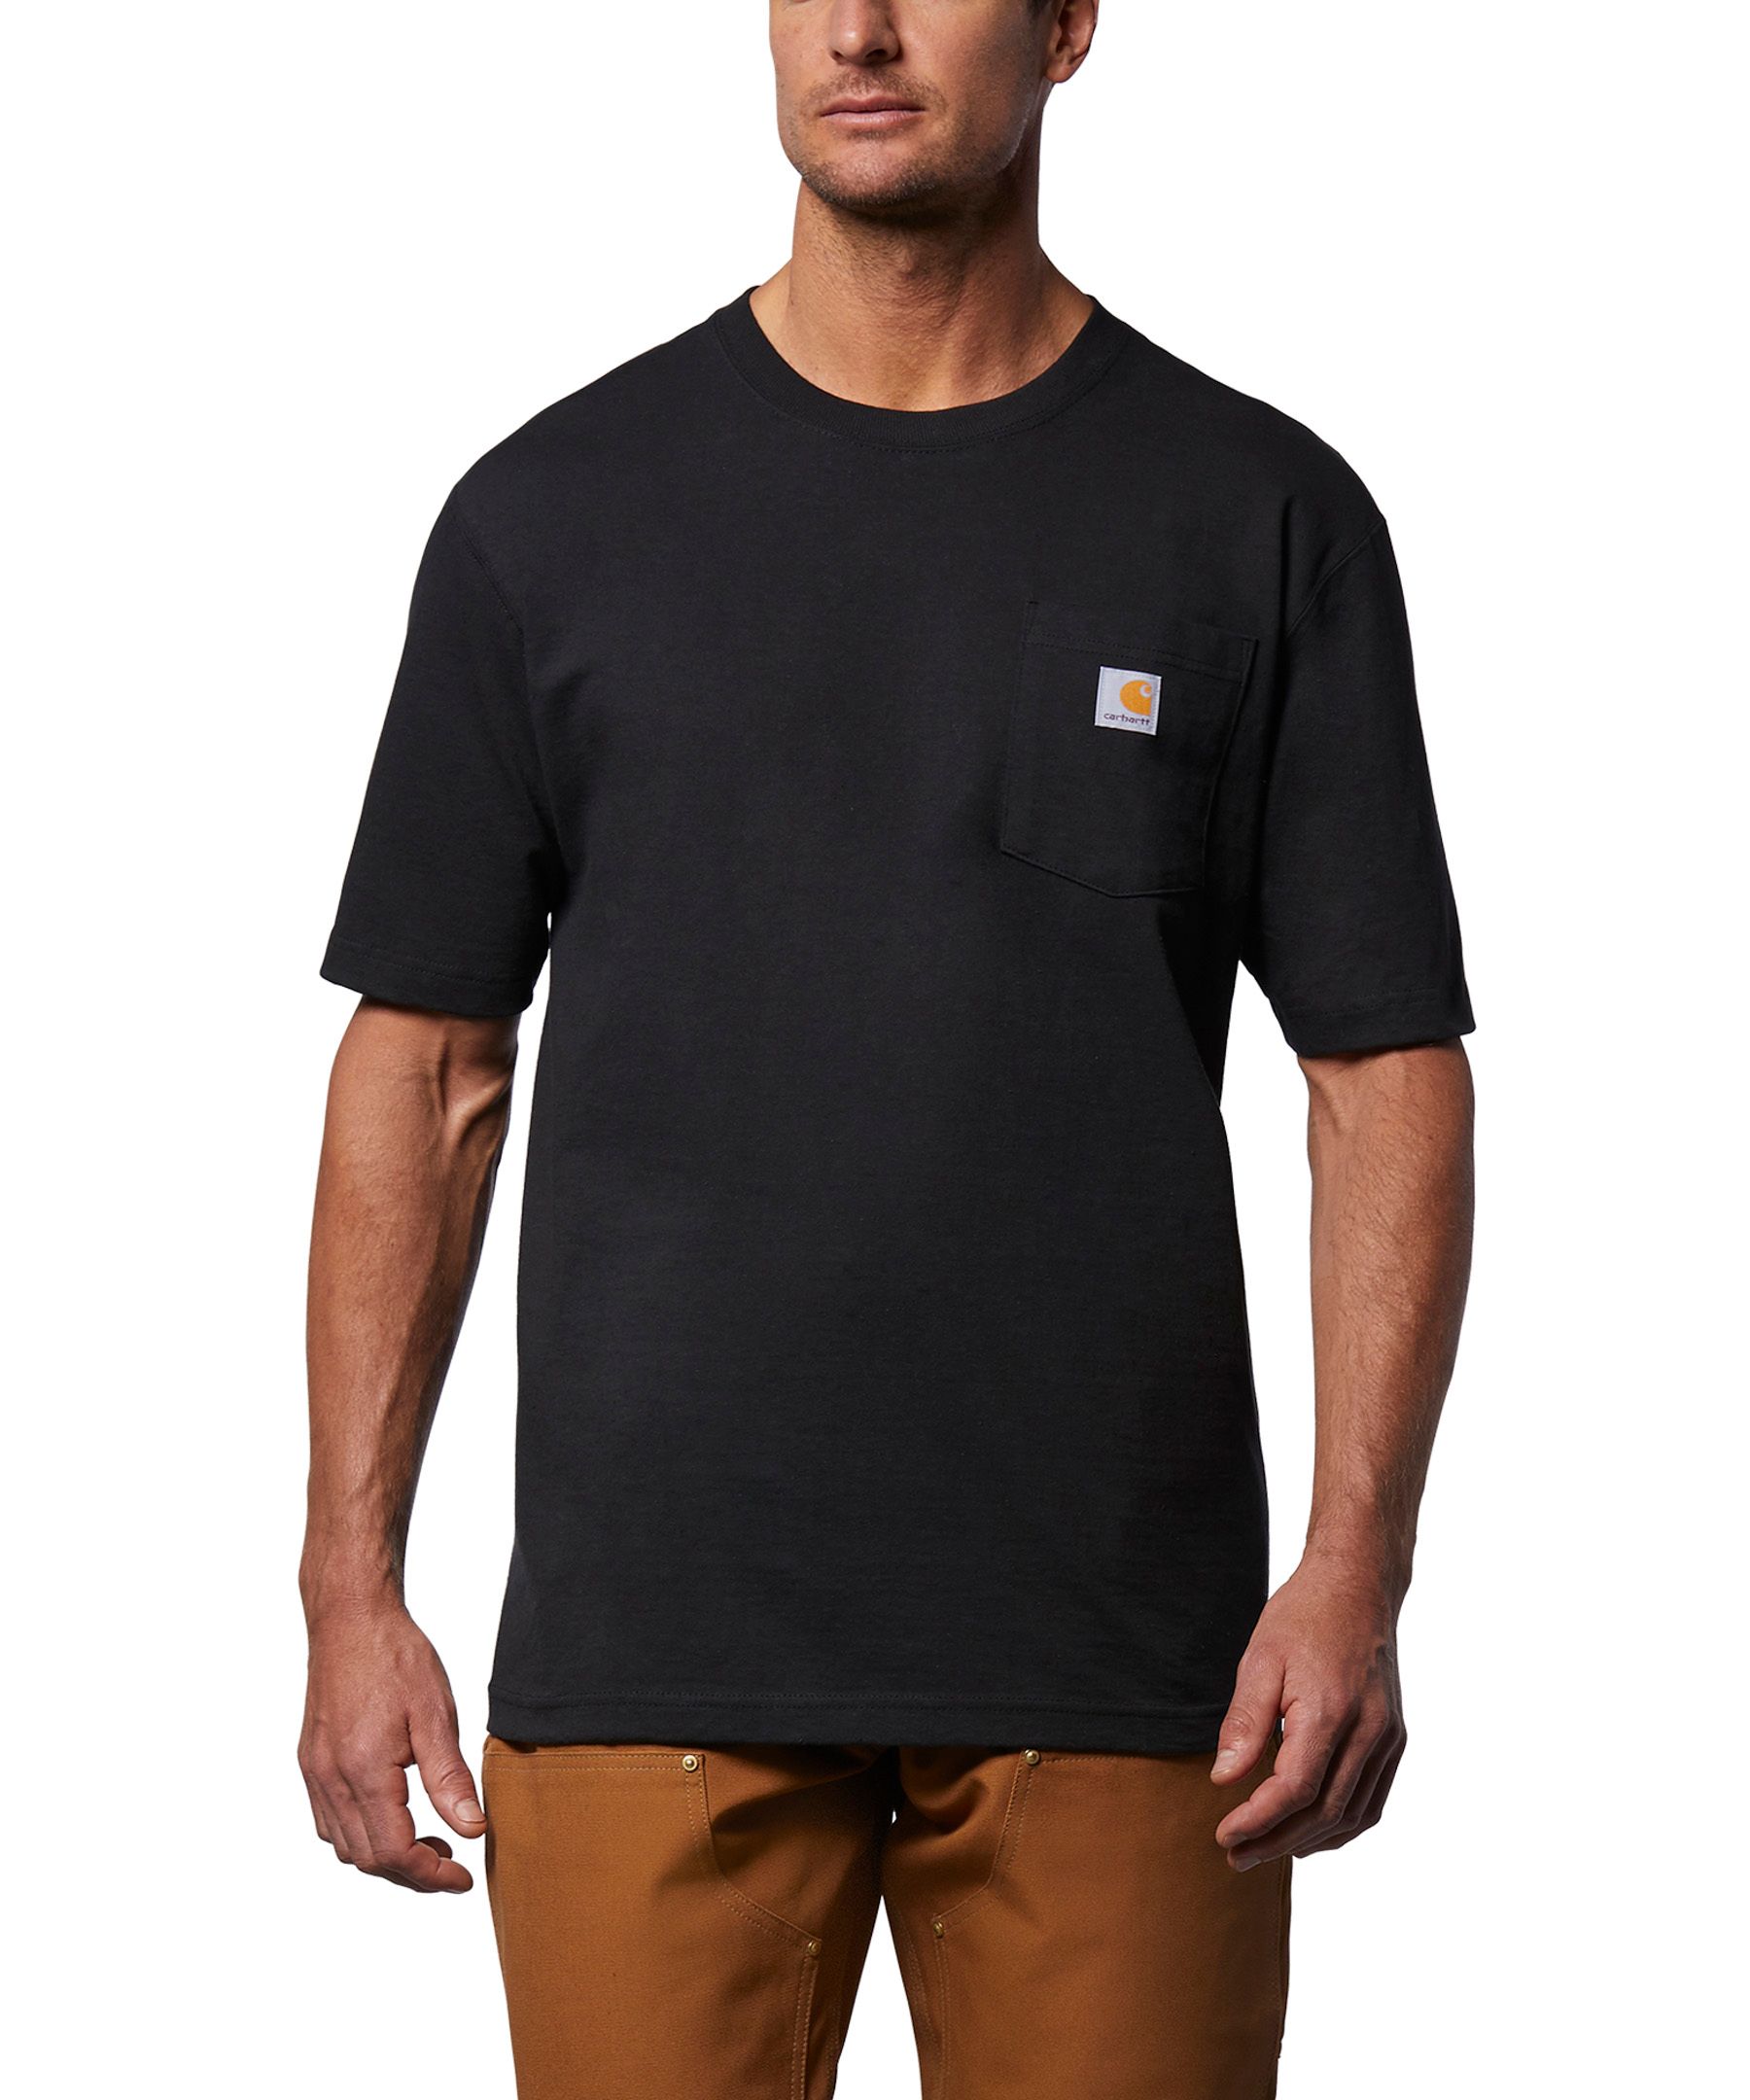 Carhartt WIP Pocket T-Shirt  White – Page Pocket T-Shirt